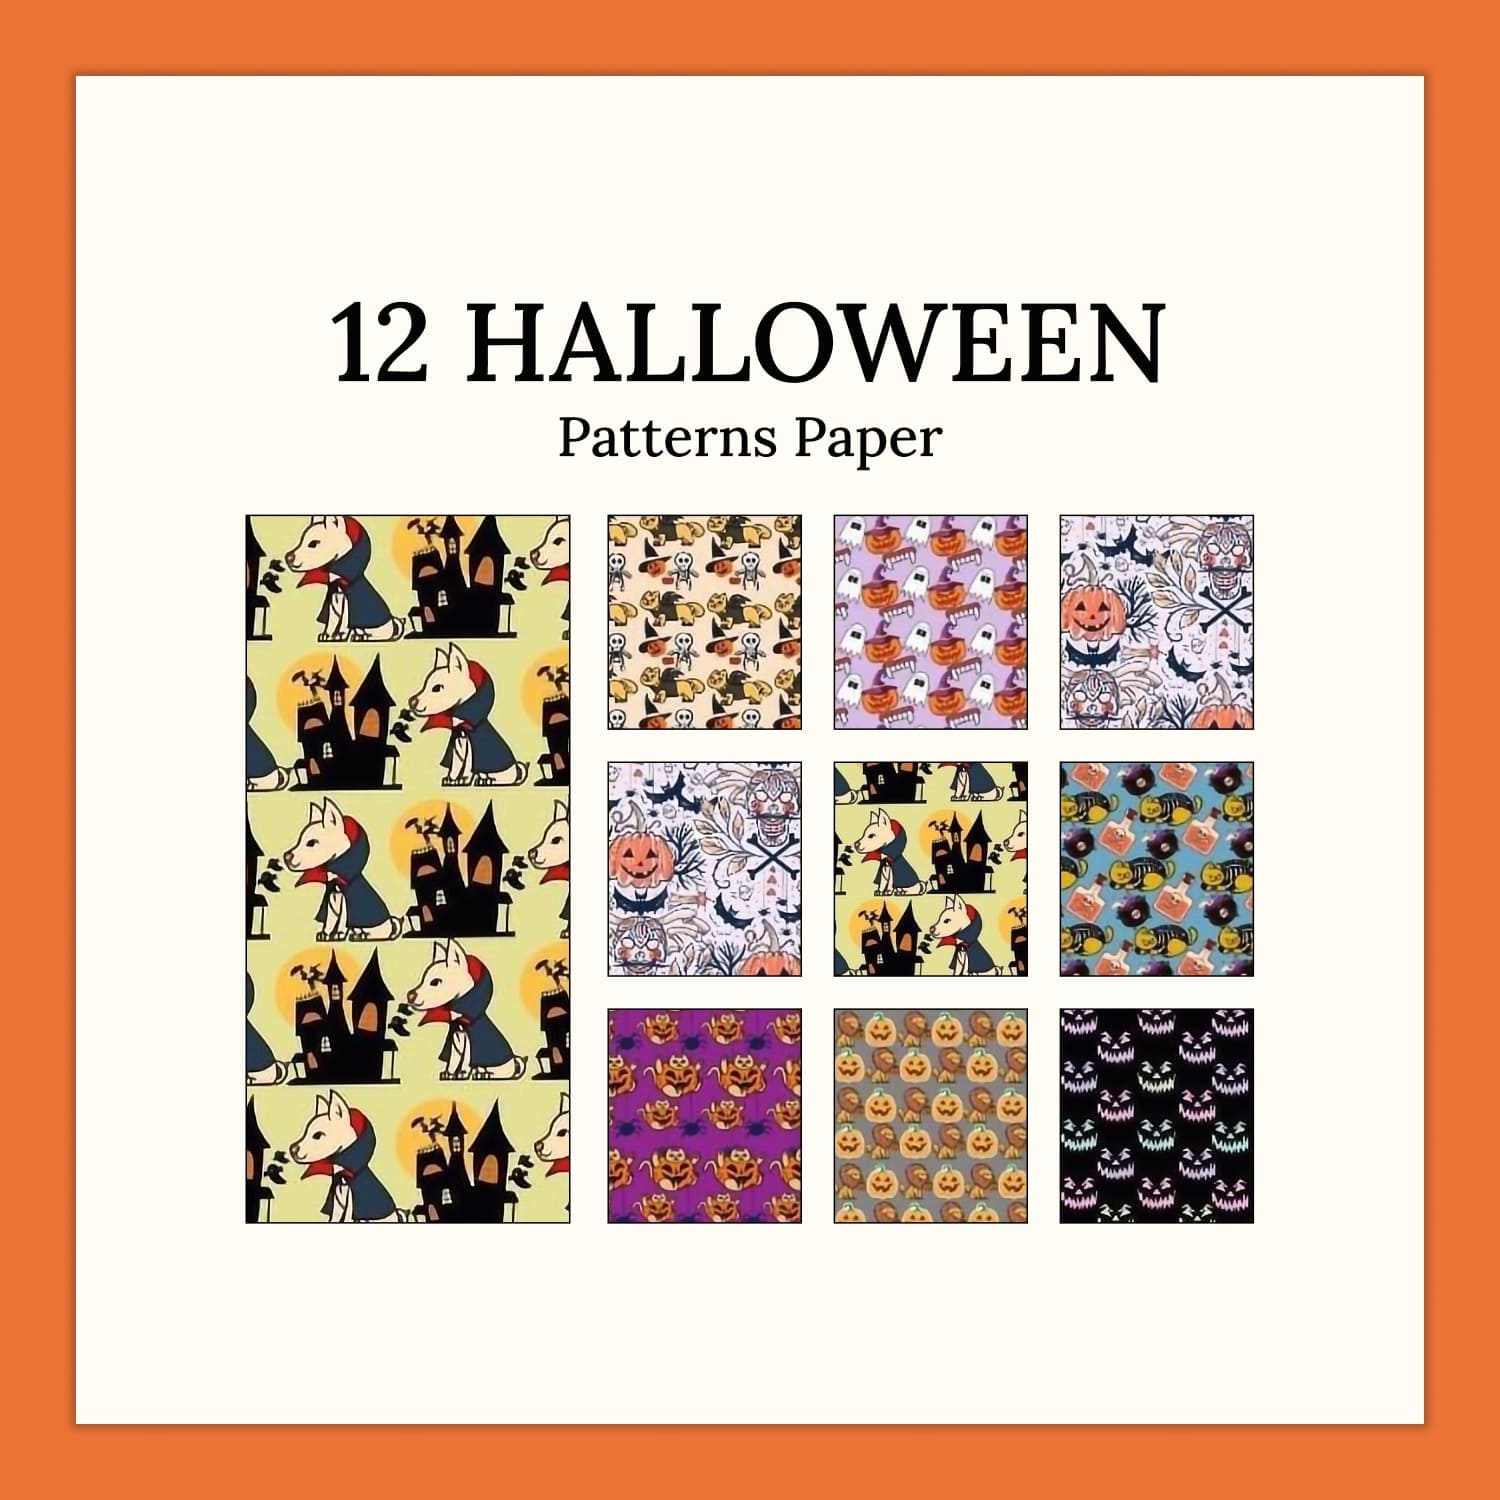 12 Halloween Patterns Paper, Background.